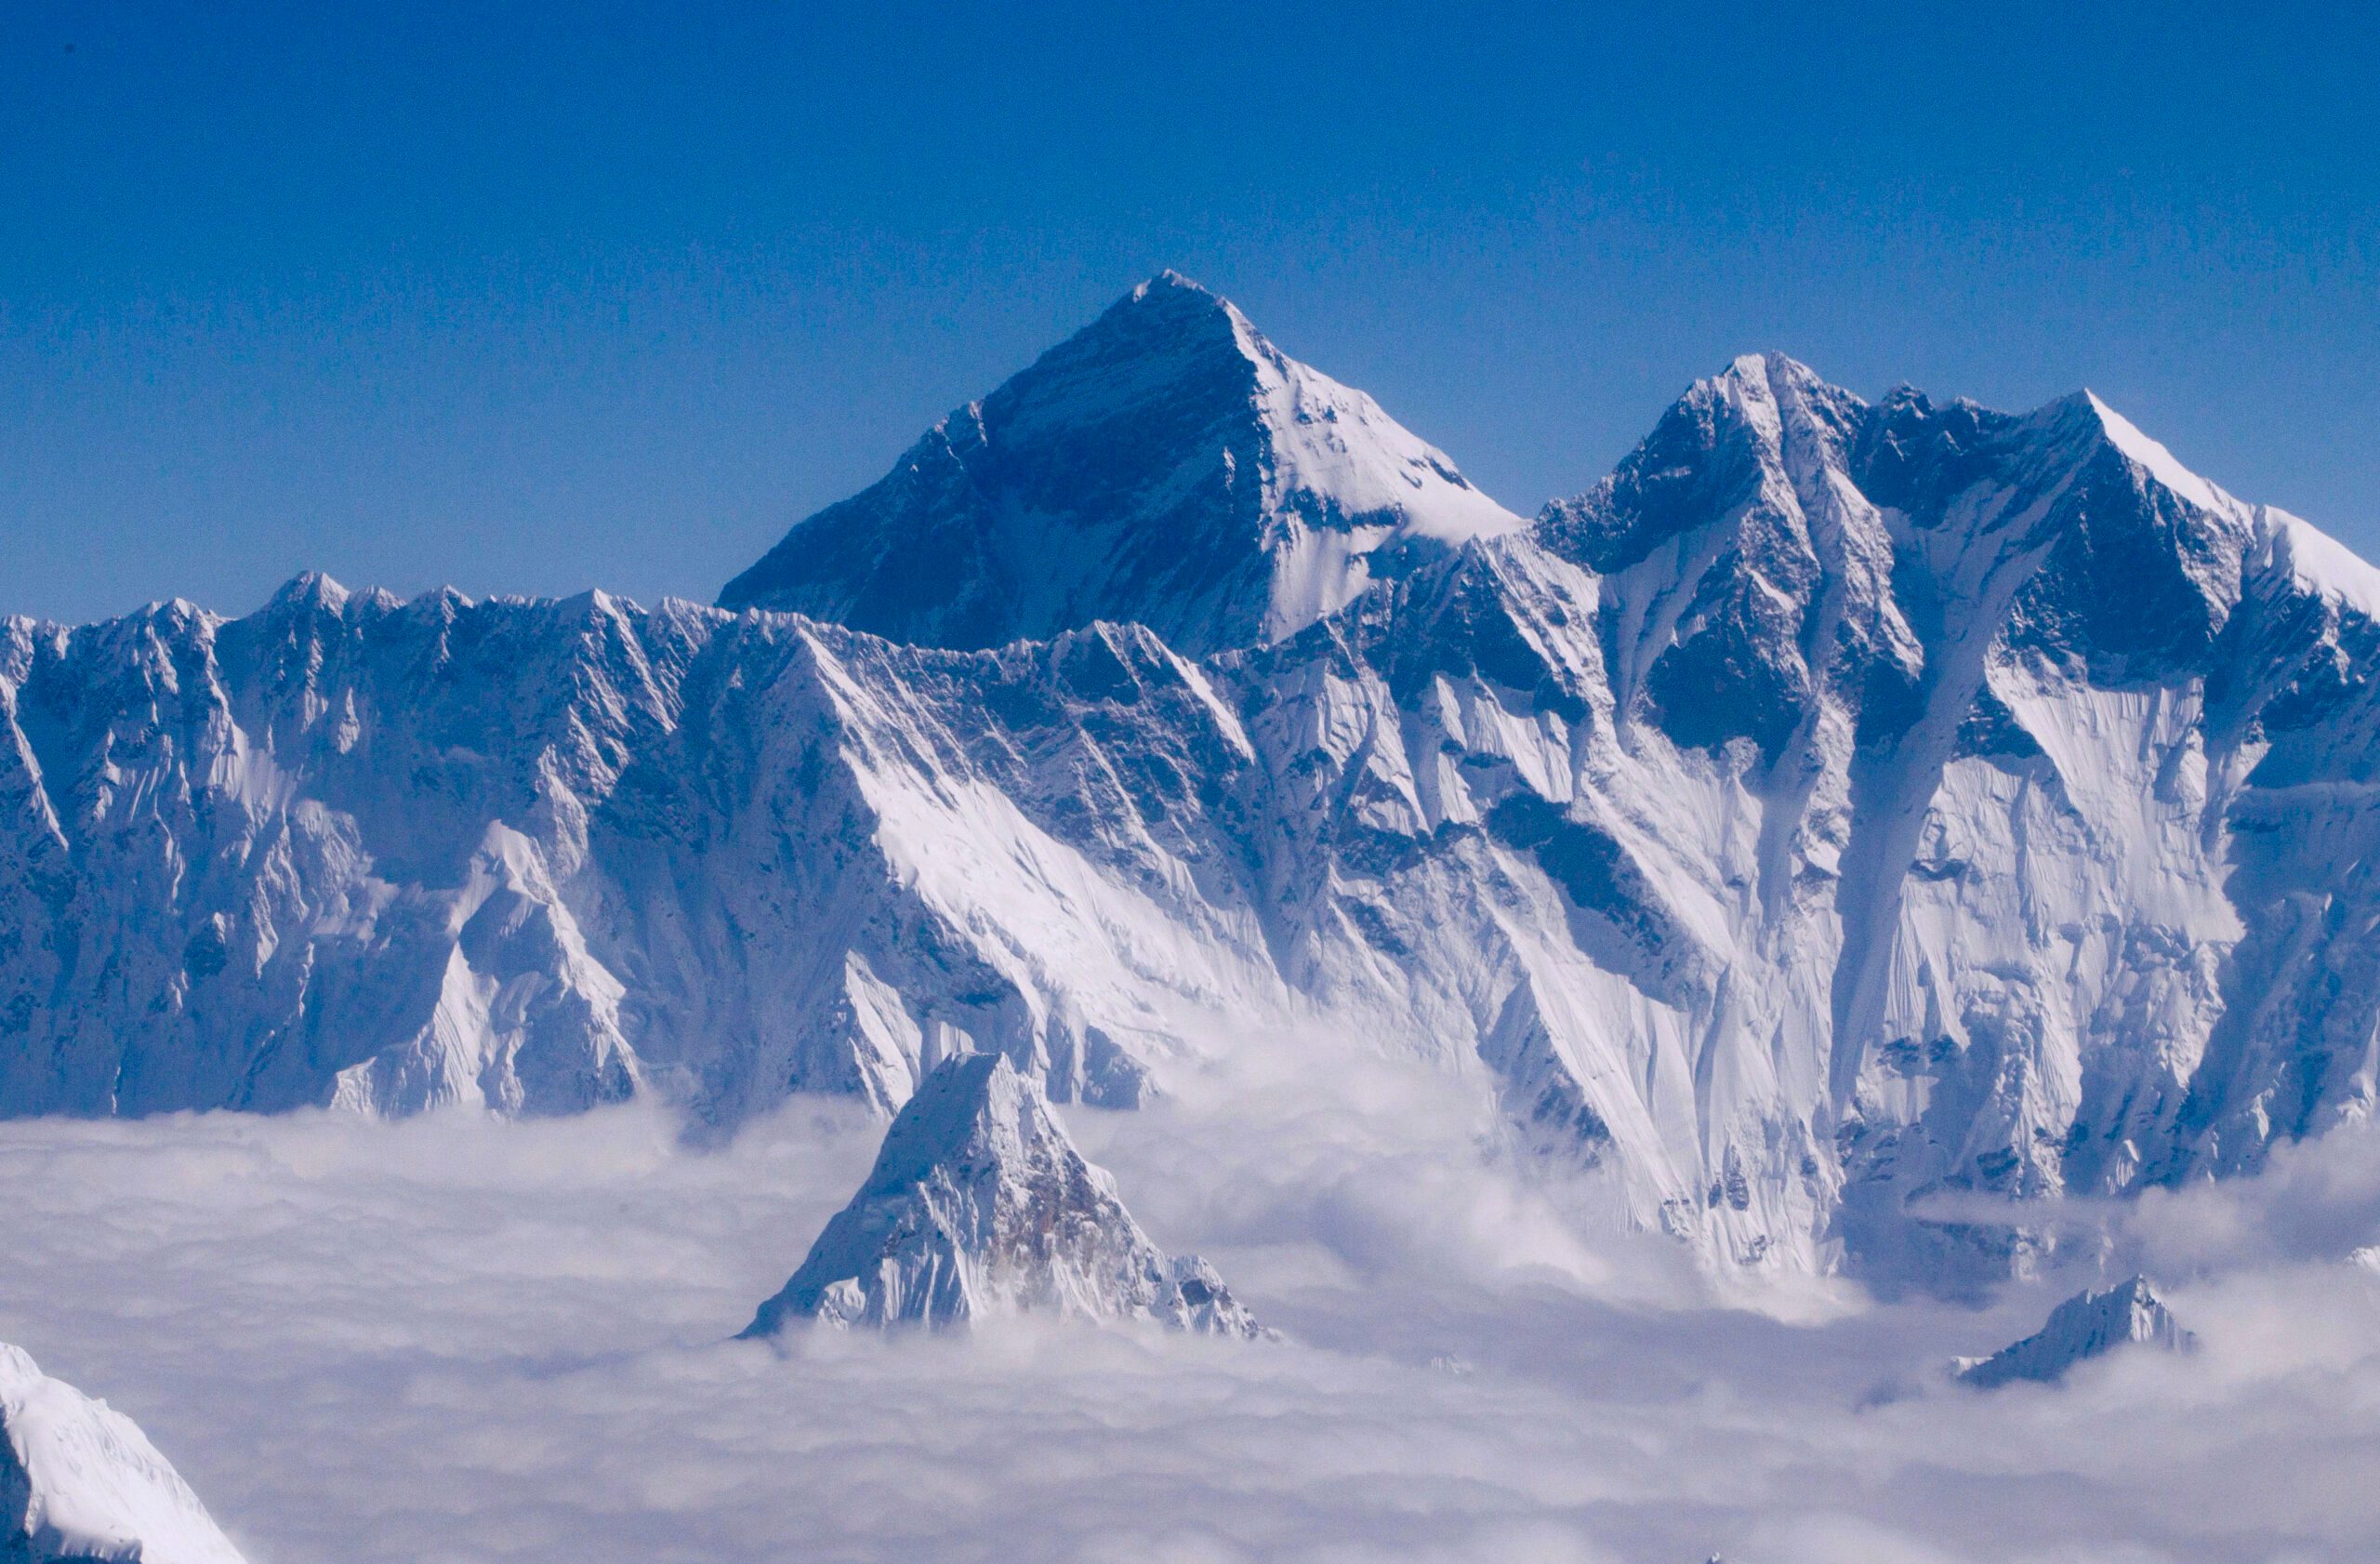 Nepal extends Everest climbing permits after quake